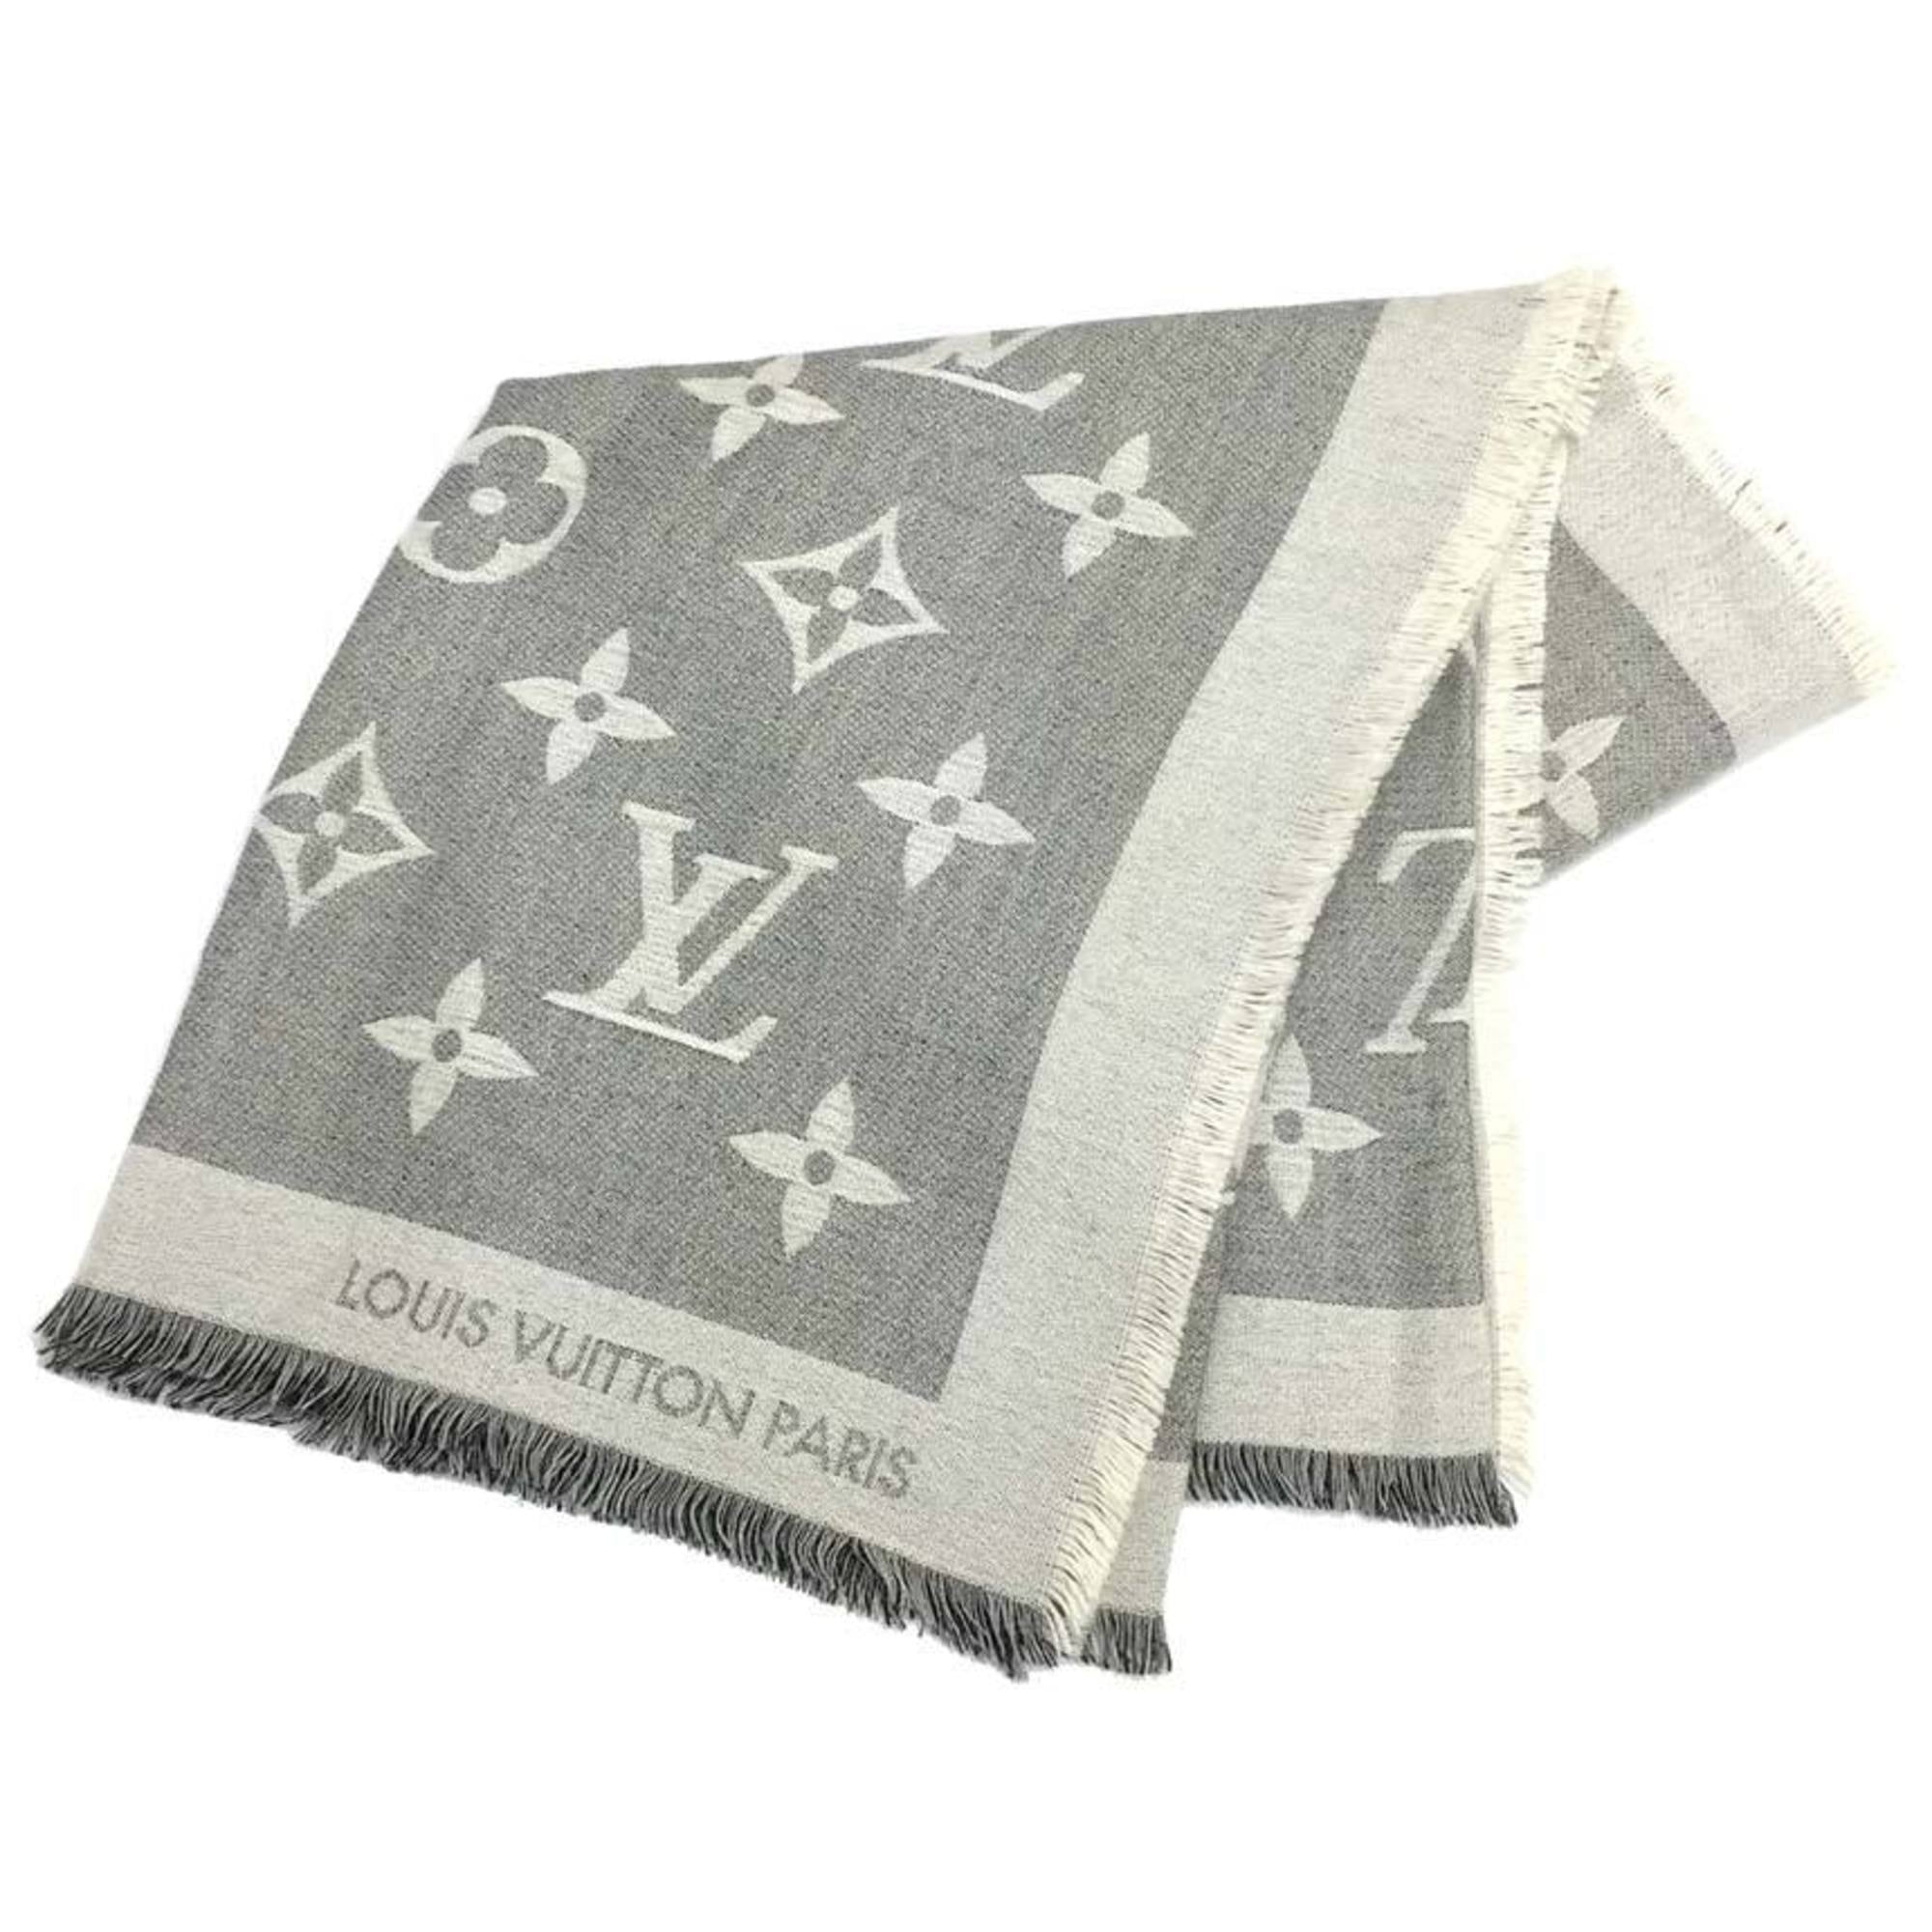 NEW 100% Authentic Louis Vuitton Silk Scarf Shawl Wrap Paris